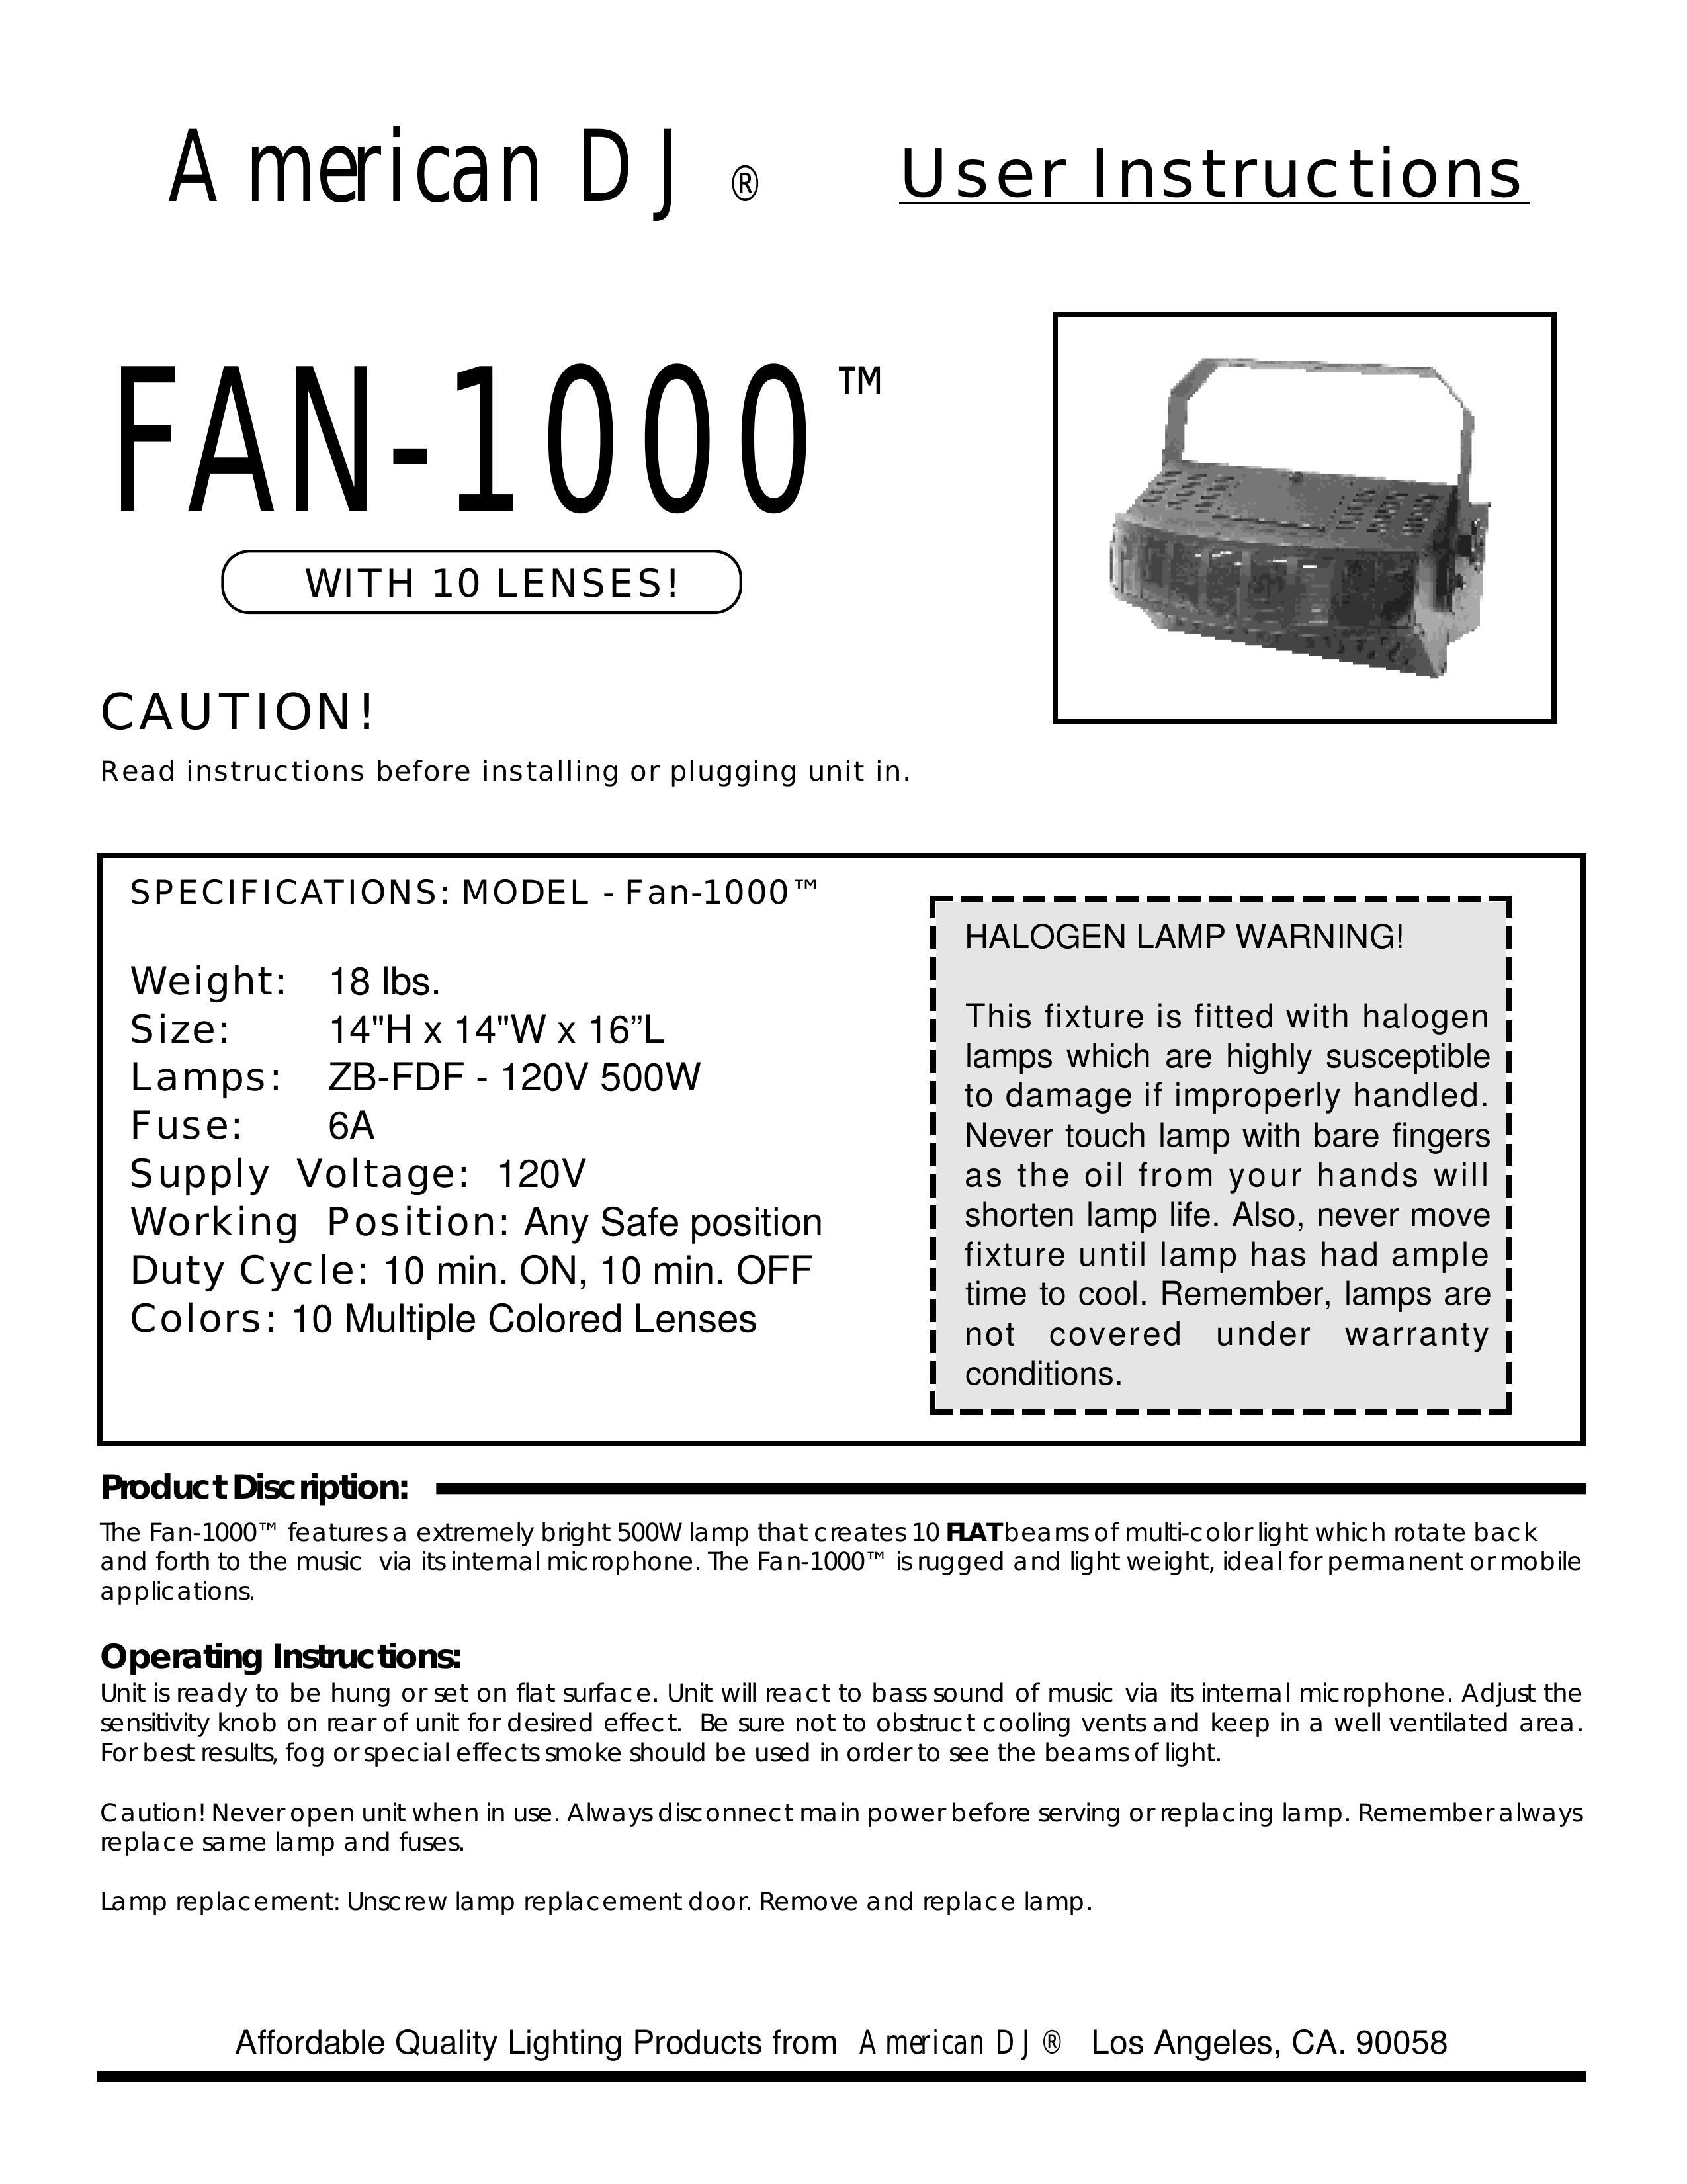 American DJ Fan-1000 DJ Equipment User Manual